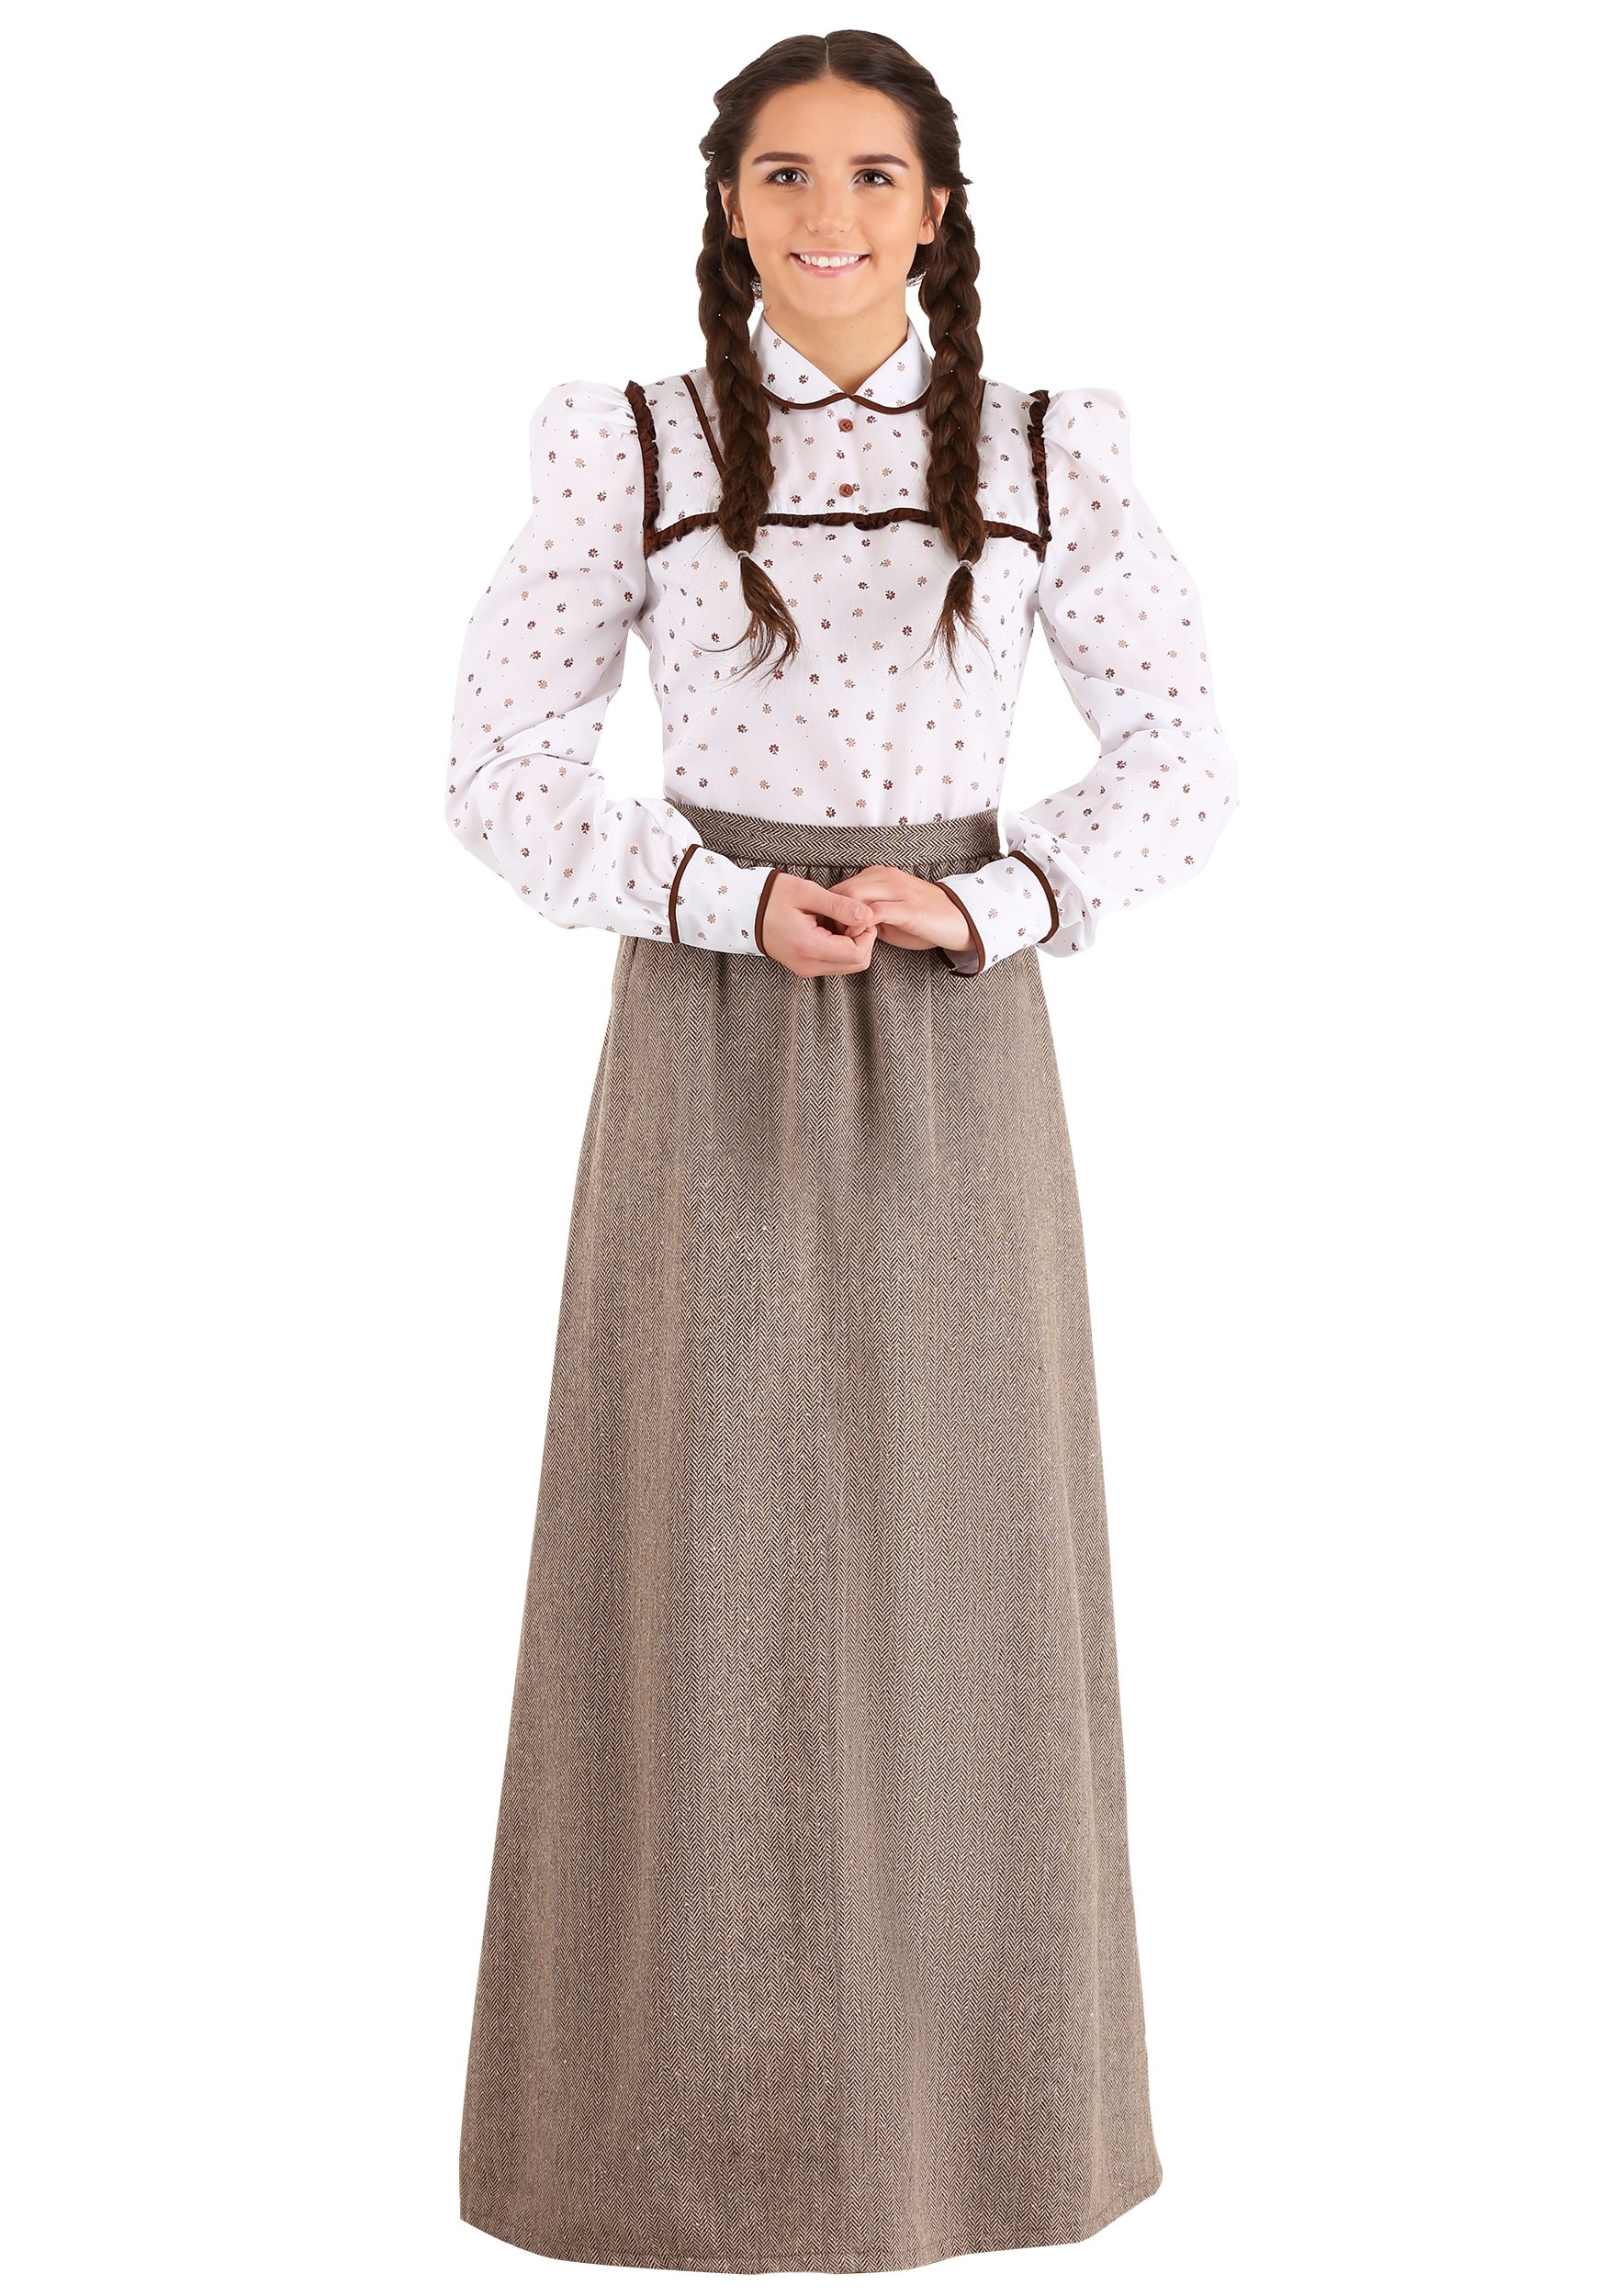 Photos - Fancy Dress Westward FUN Costumes  Pioneer Costume for Women Brown/White FUN1304AD 